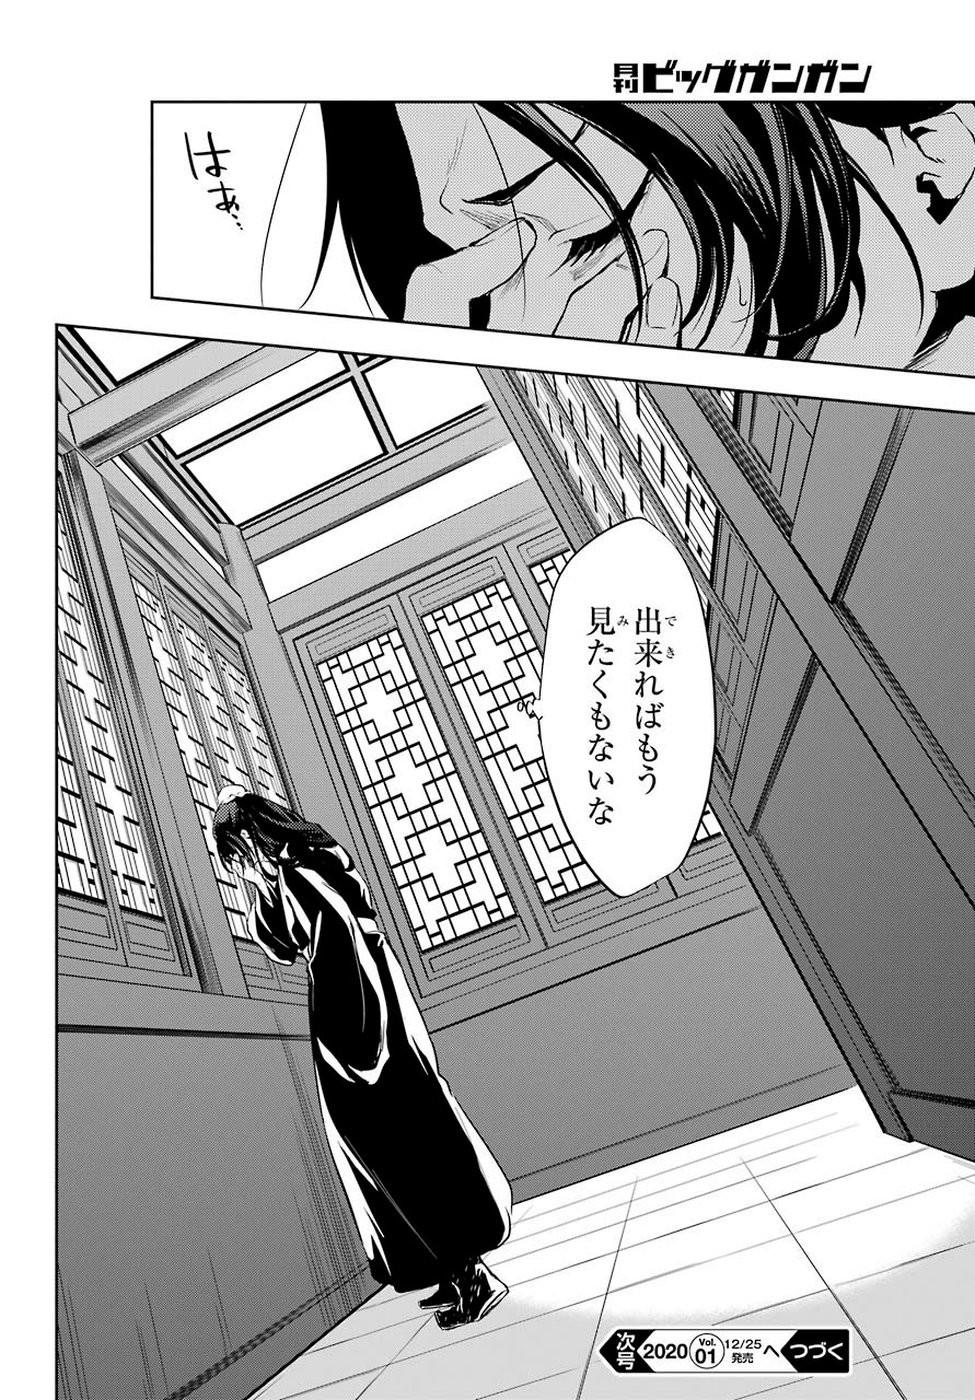 Kusuriya no Hitorigoto - Chapter 29.1 - Page 18